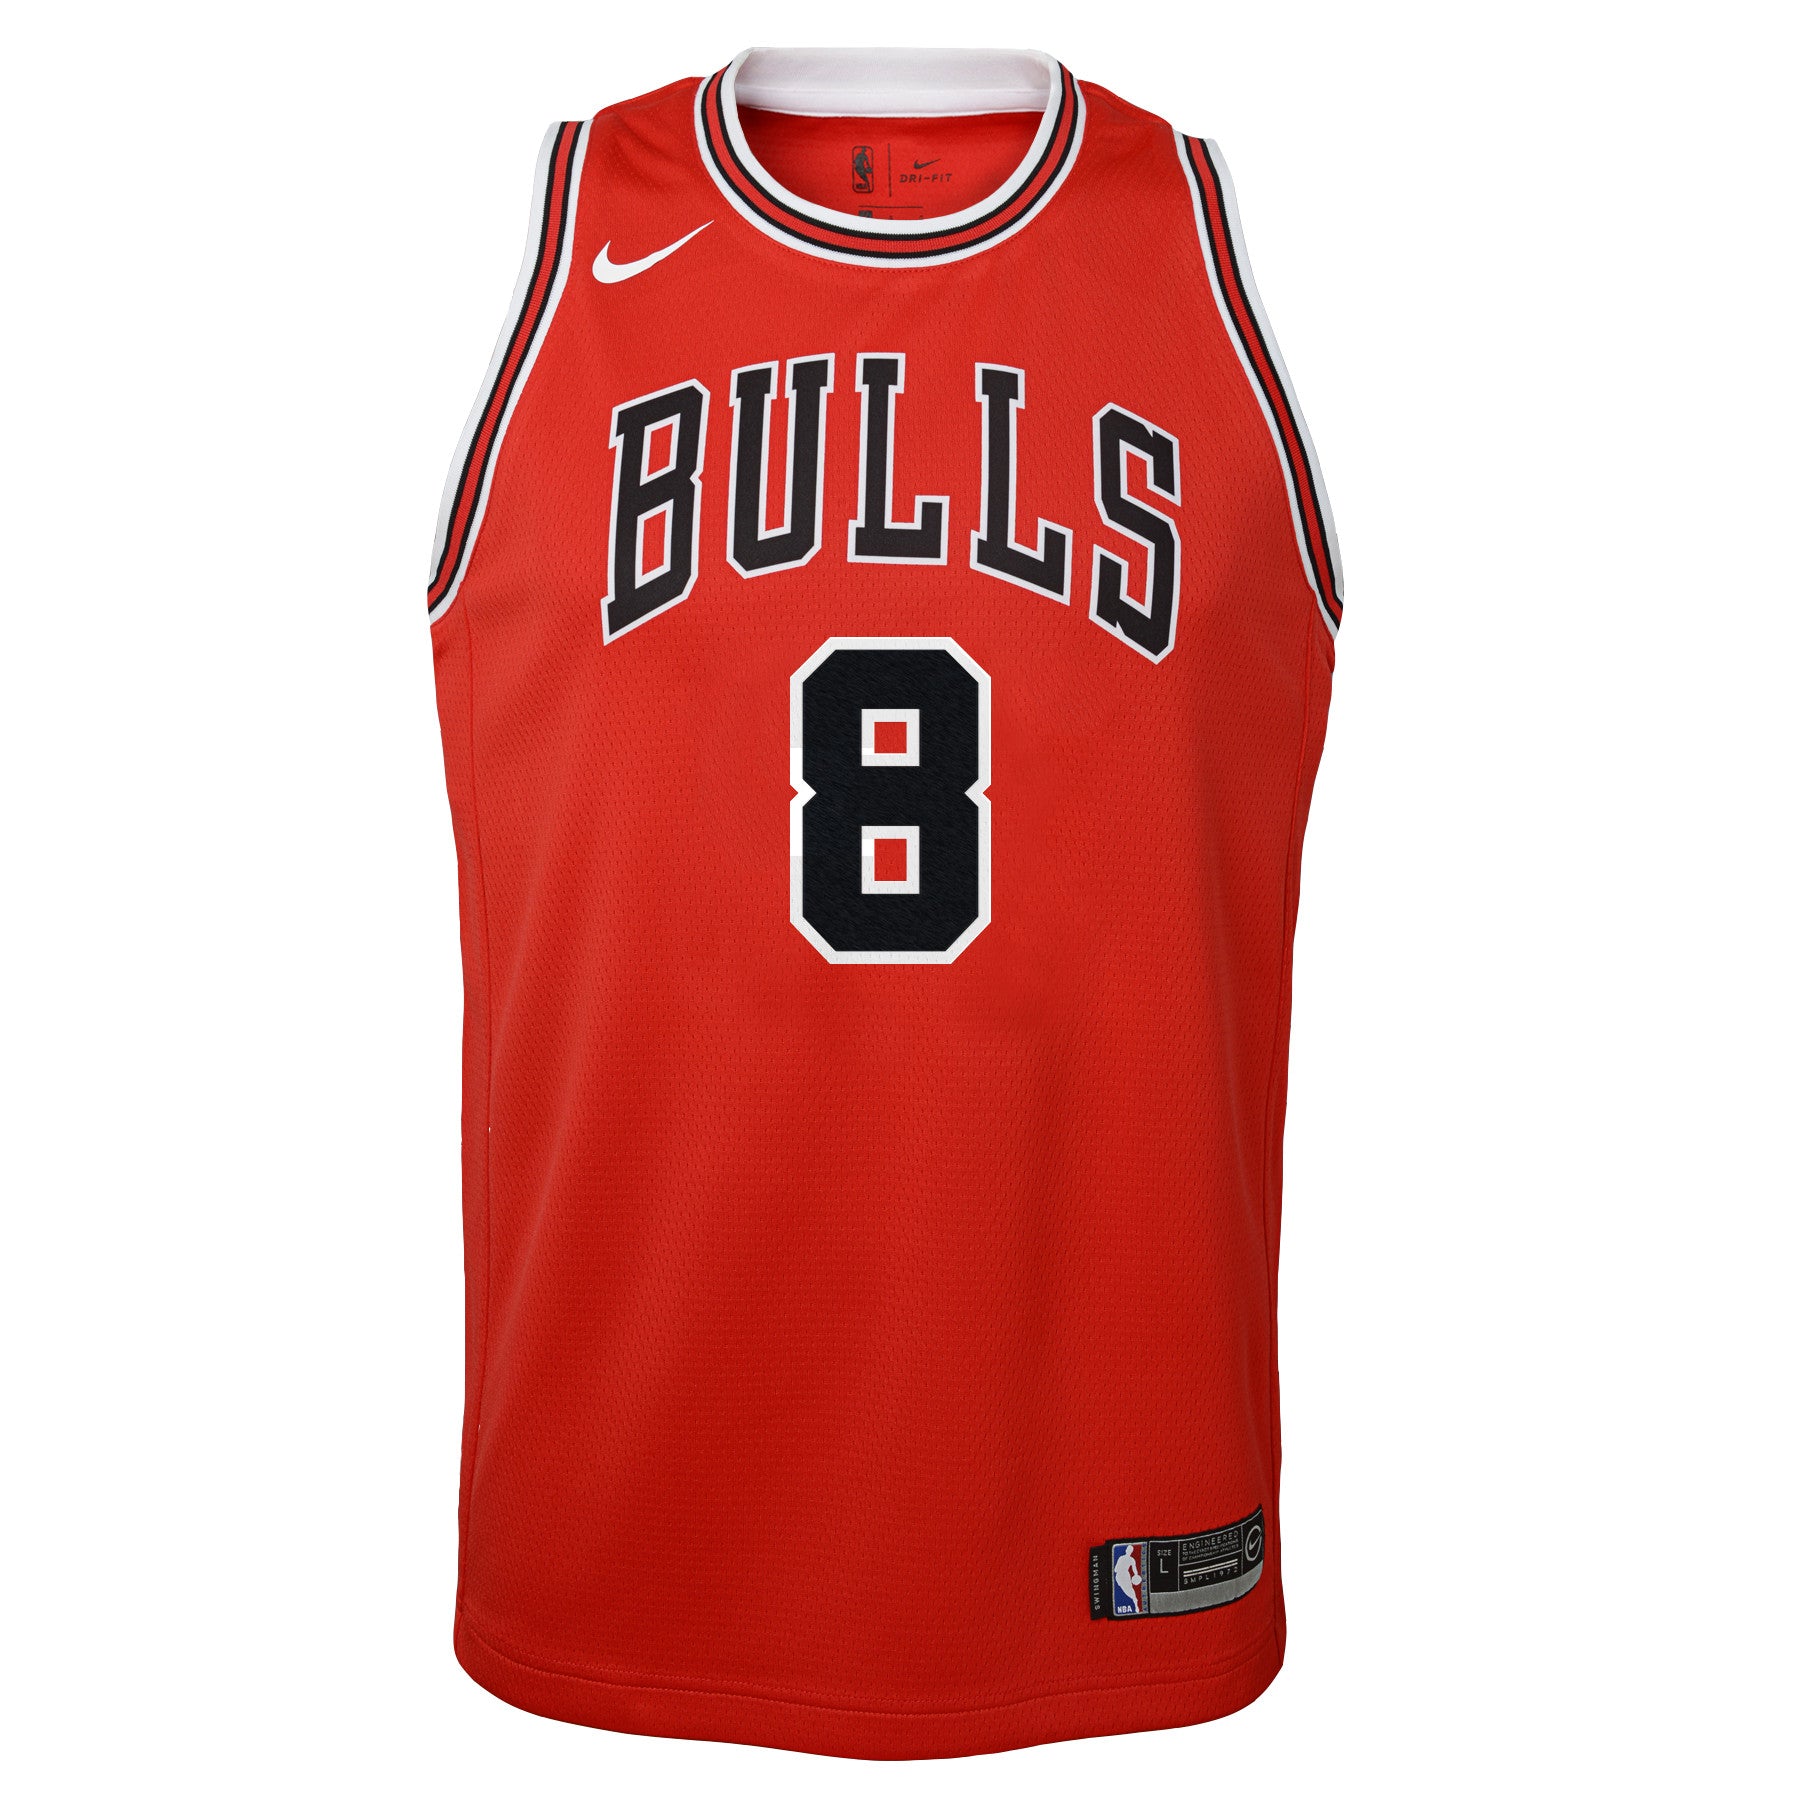 buy chicago bulls jersey